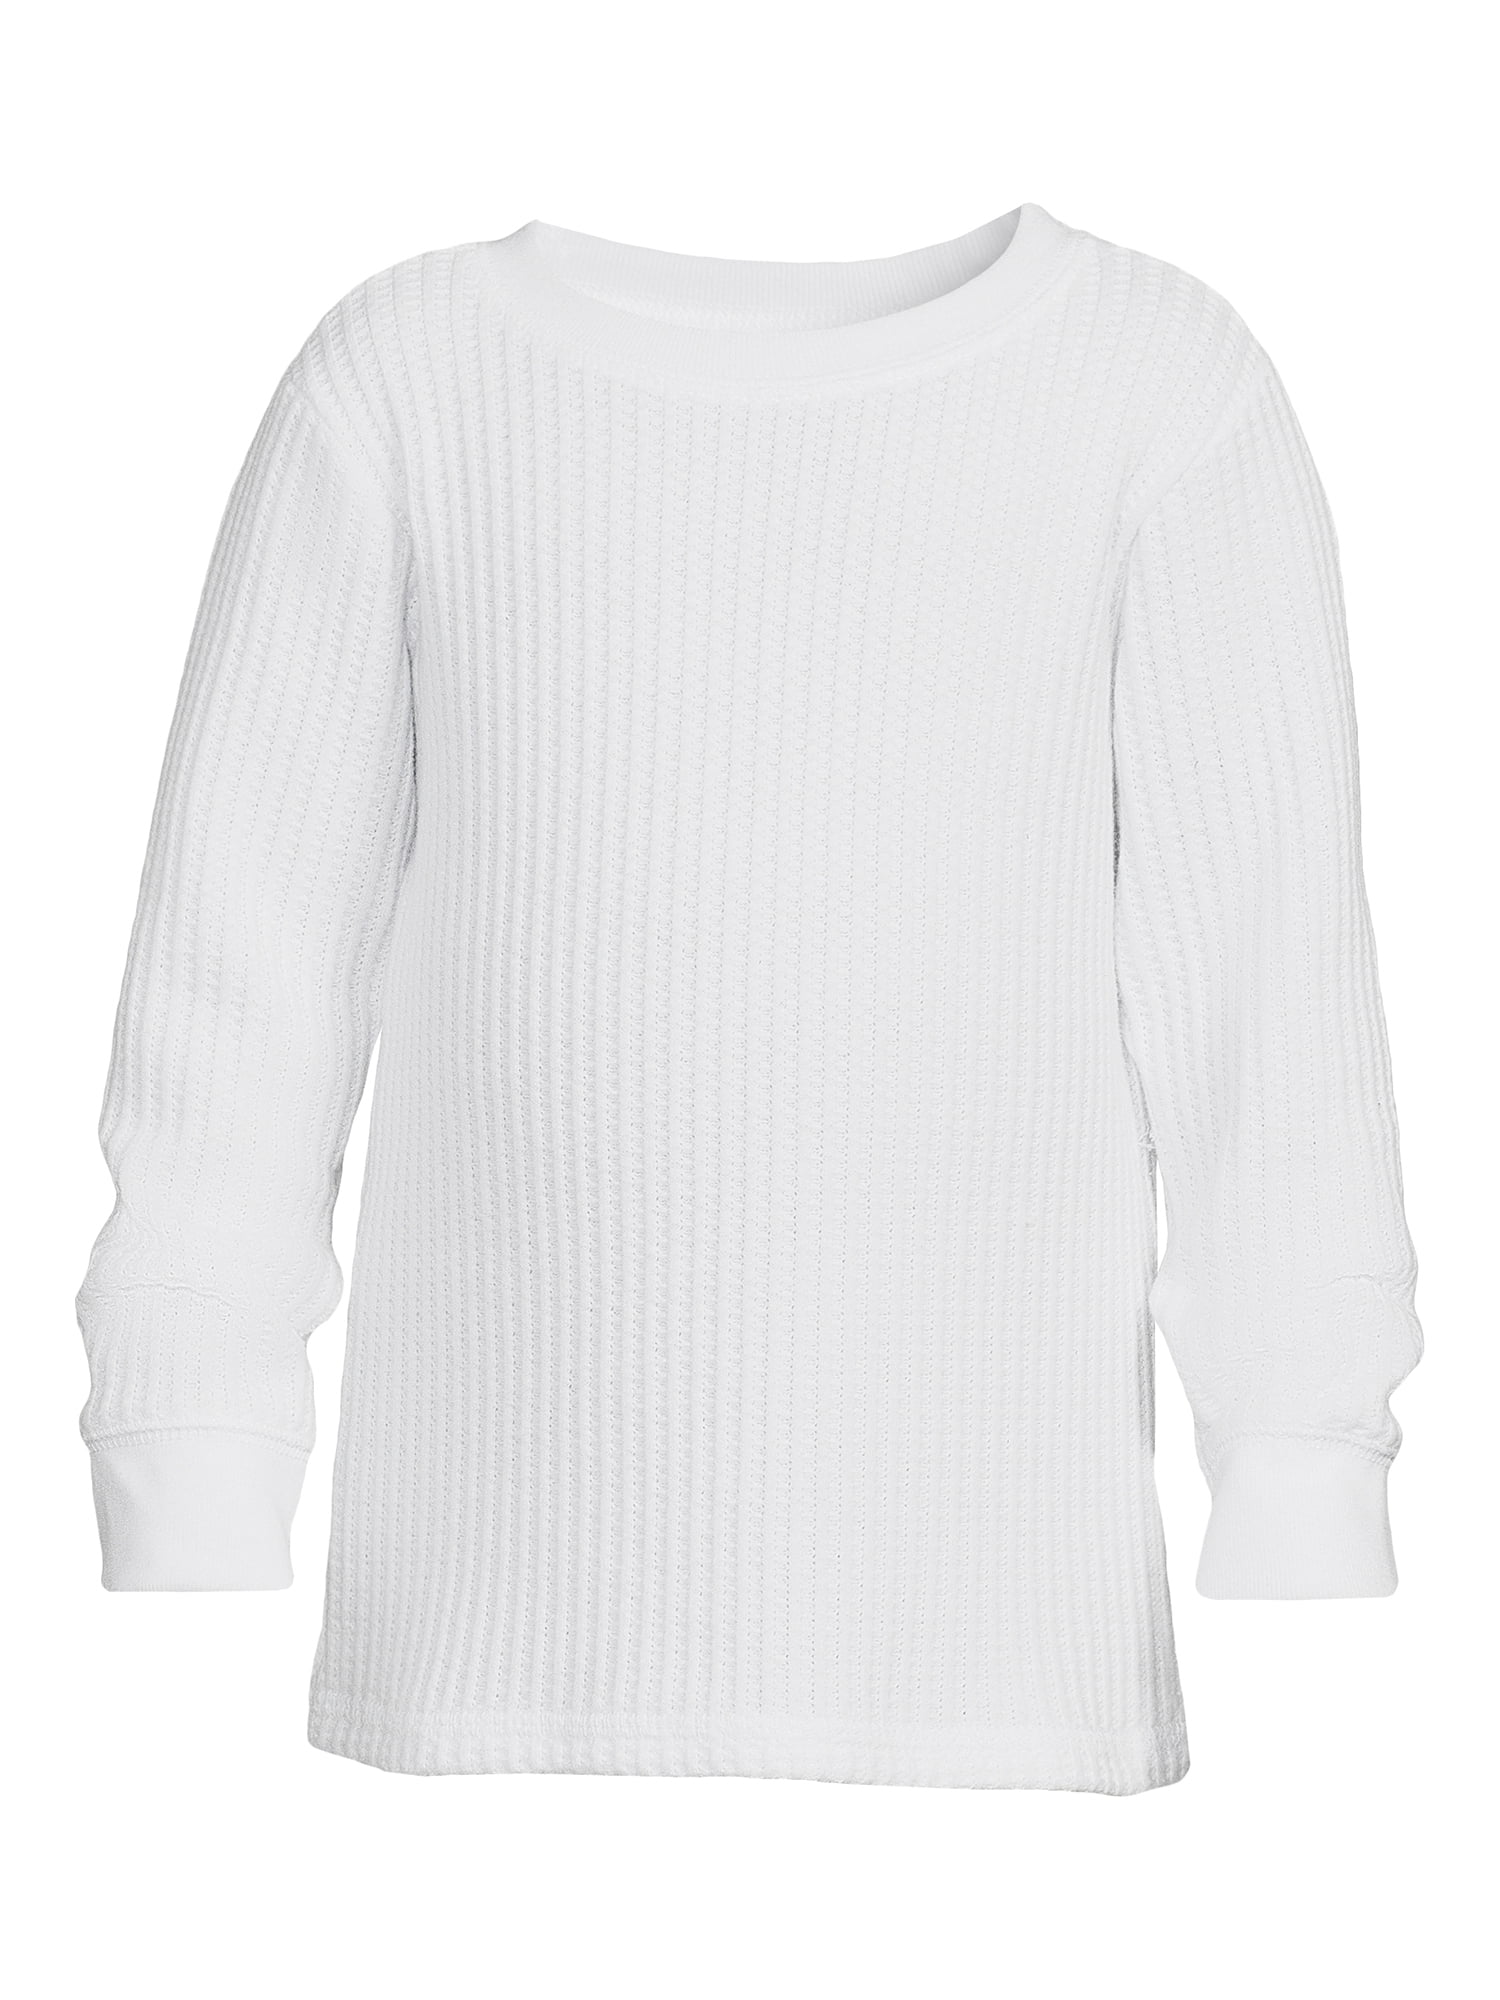 Garanimals Toddler Boy Long Sleeve Waffle Knit T-Shirt, Sizes 12M-5T